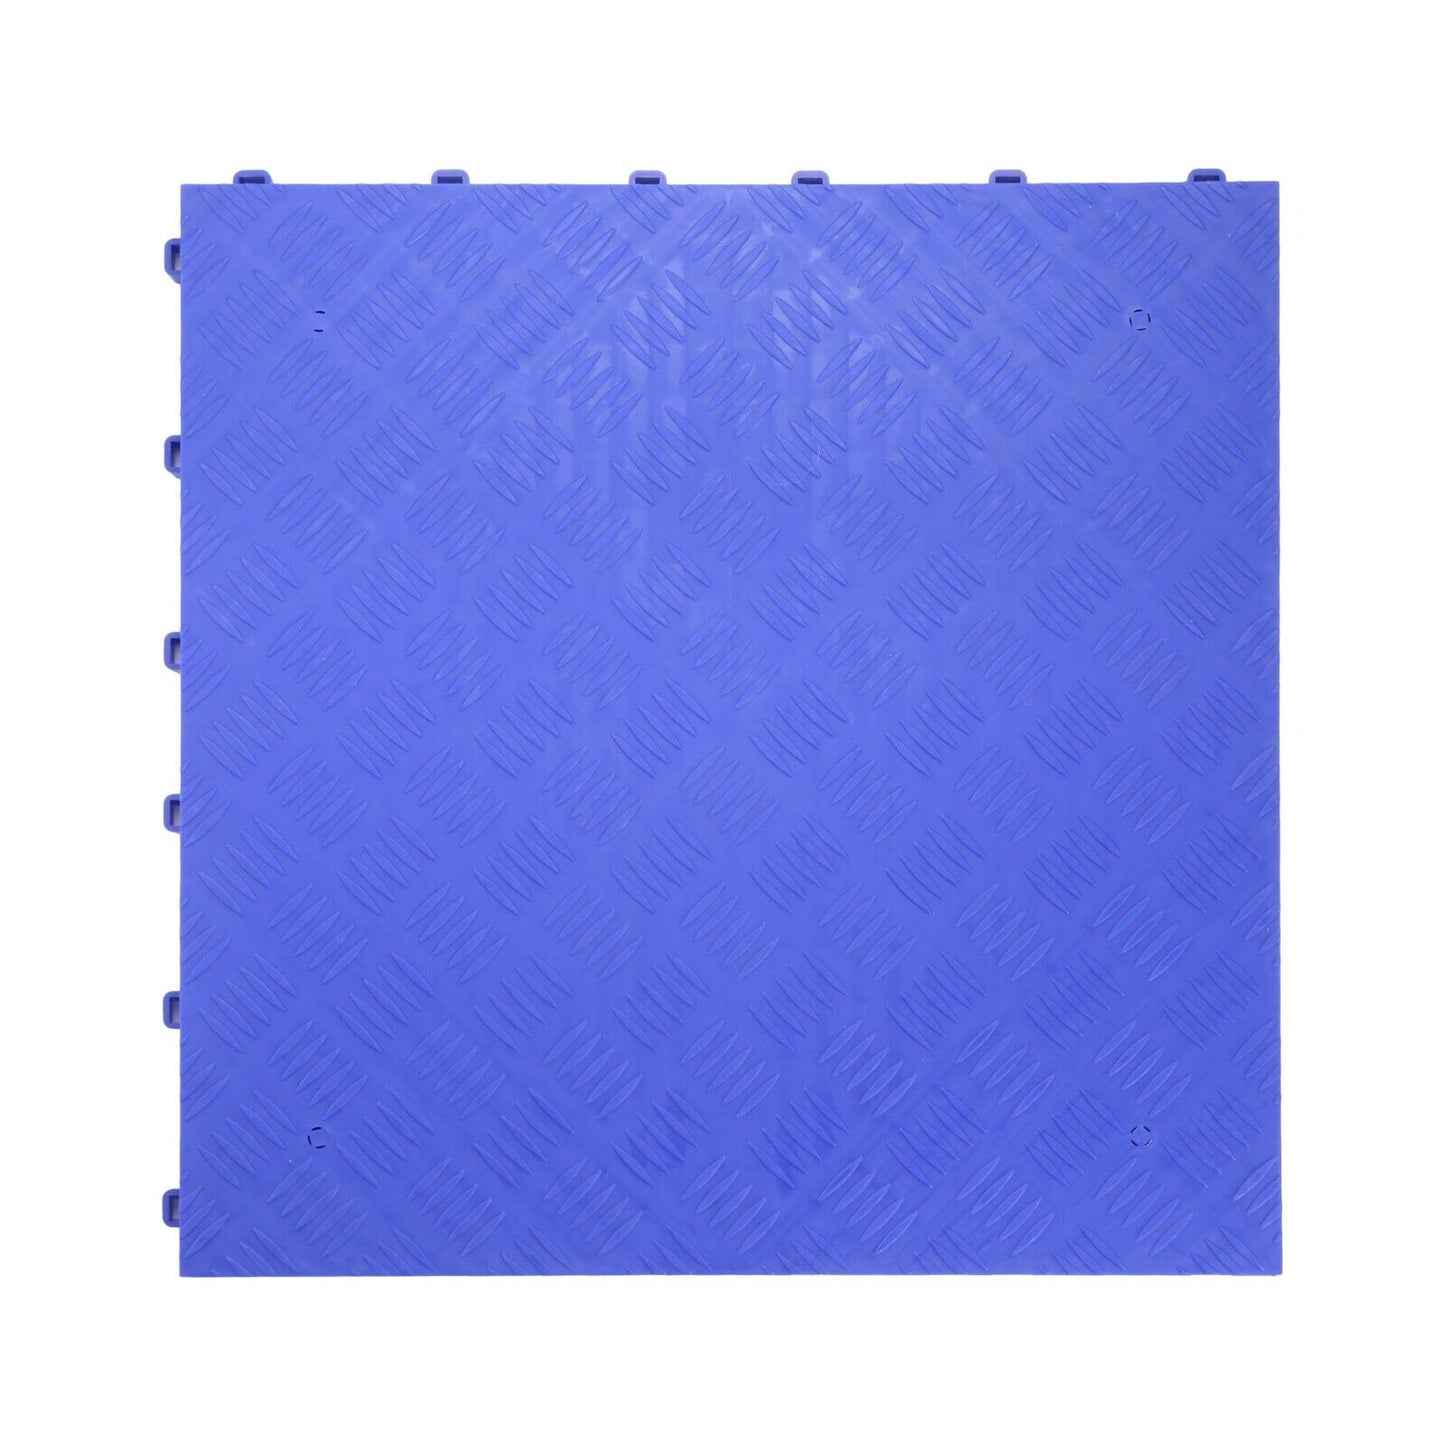 Modular Interlocking Solid Garage Flooring Tiles - Blue